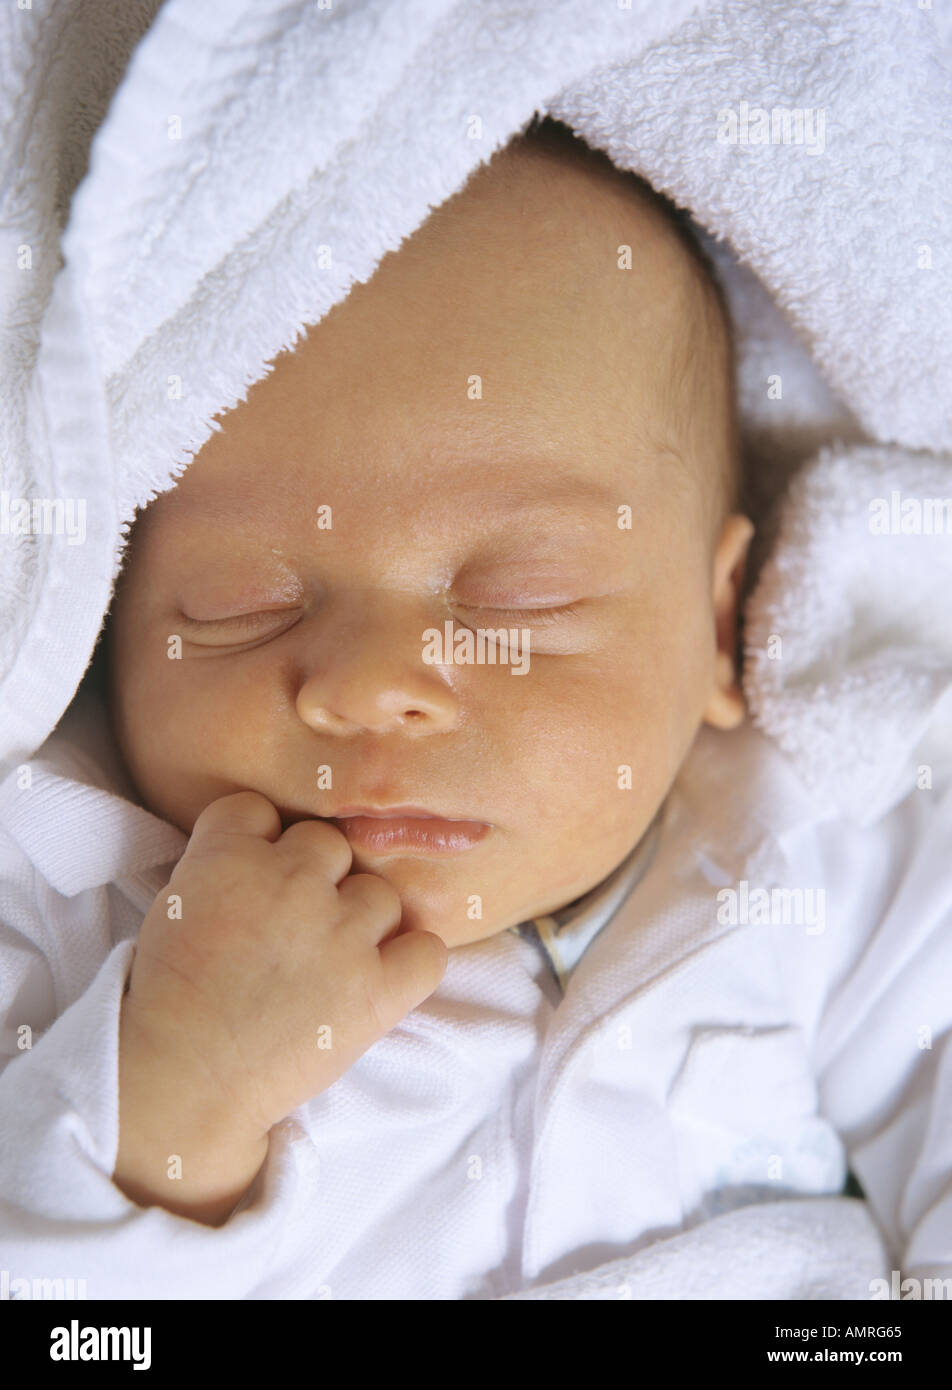 Newborn baby boy (0-3 months) sleeping, close-up Banque D'Images